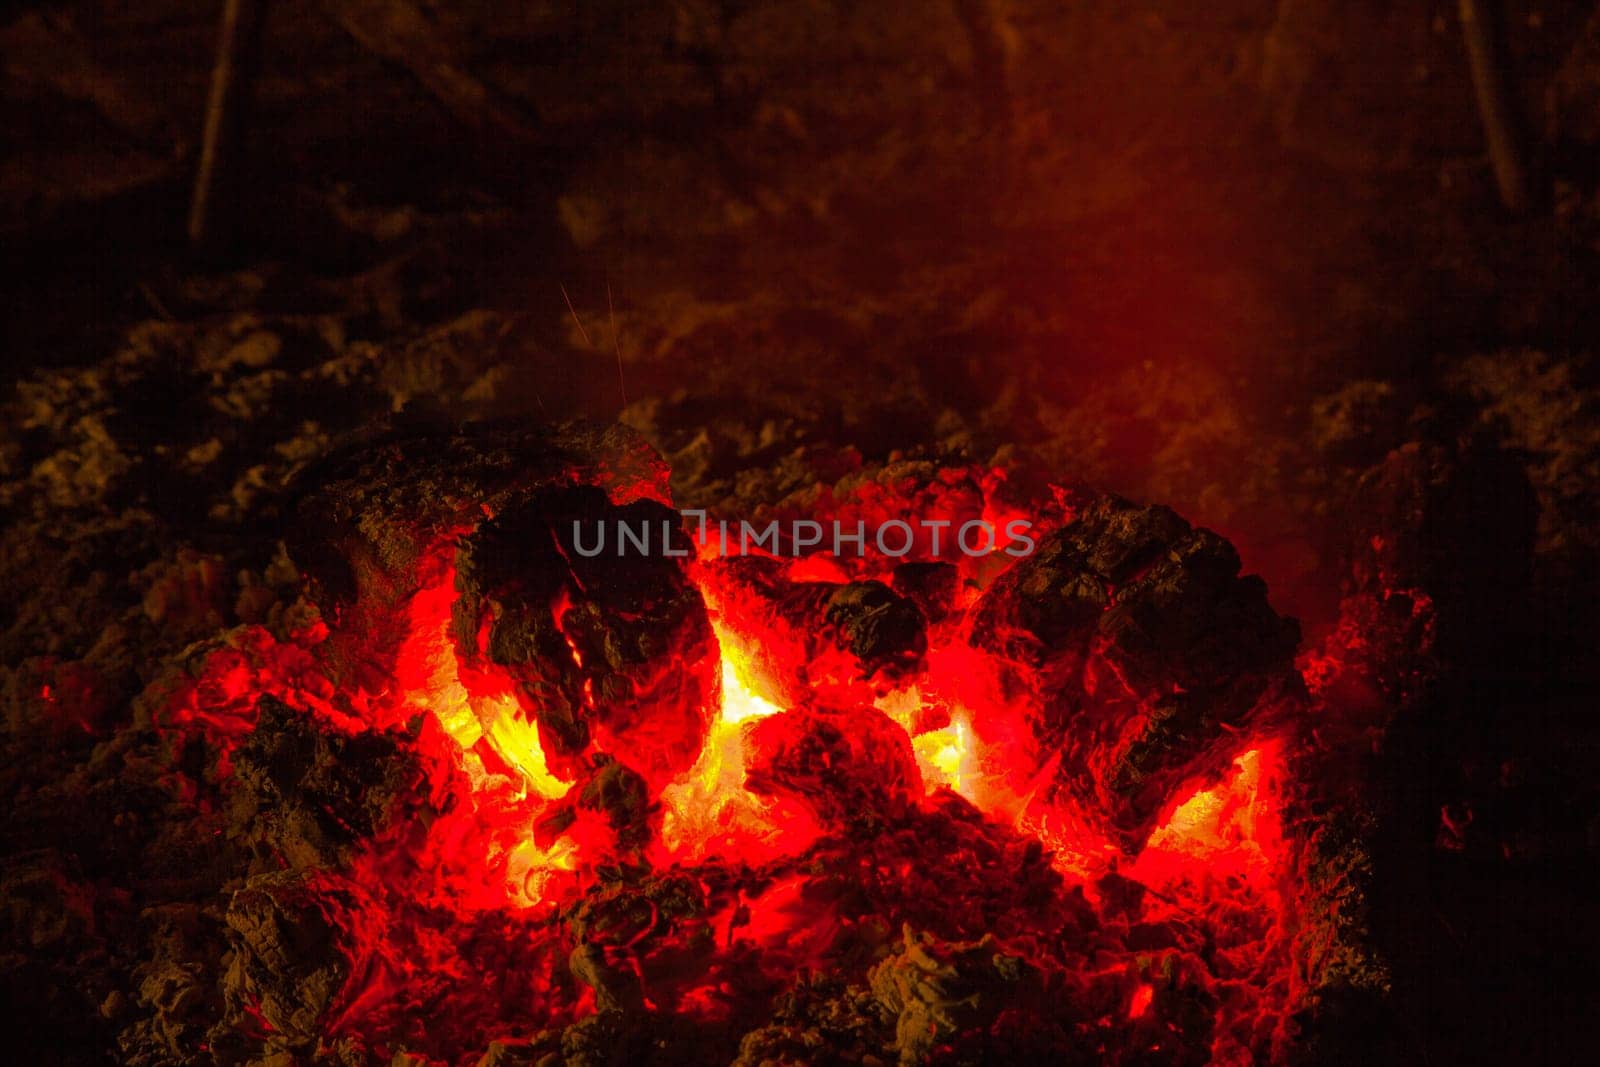 Glowing embers 10605 by kobus_peche